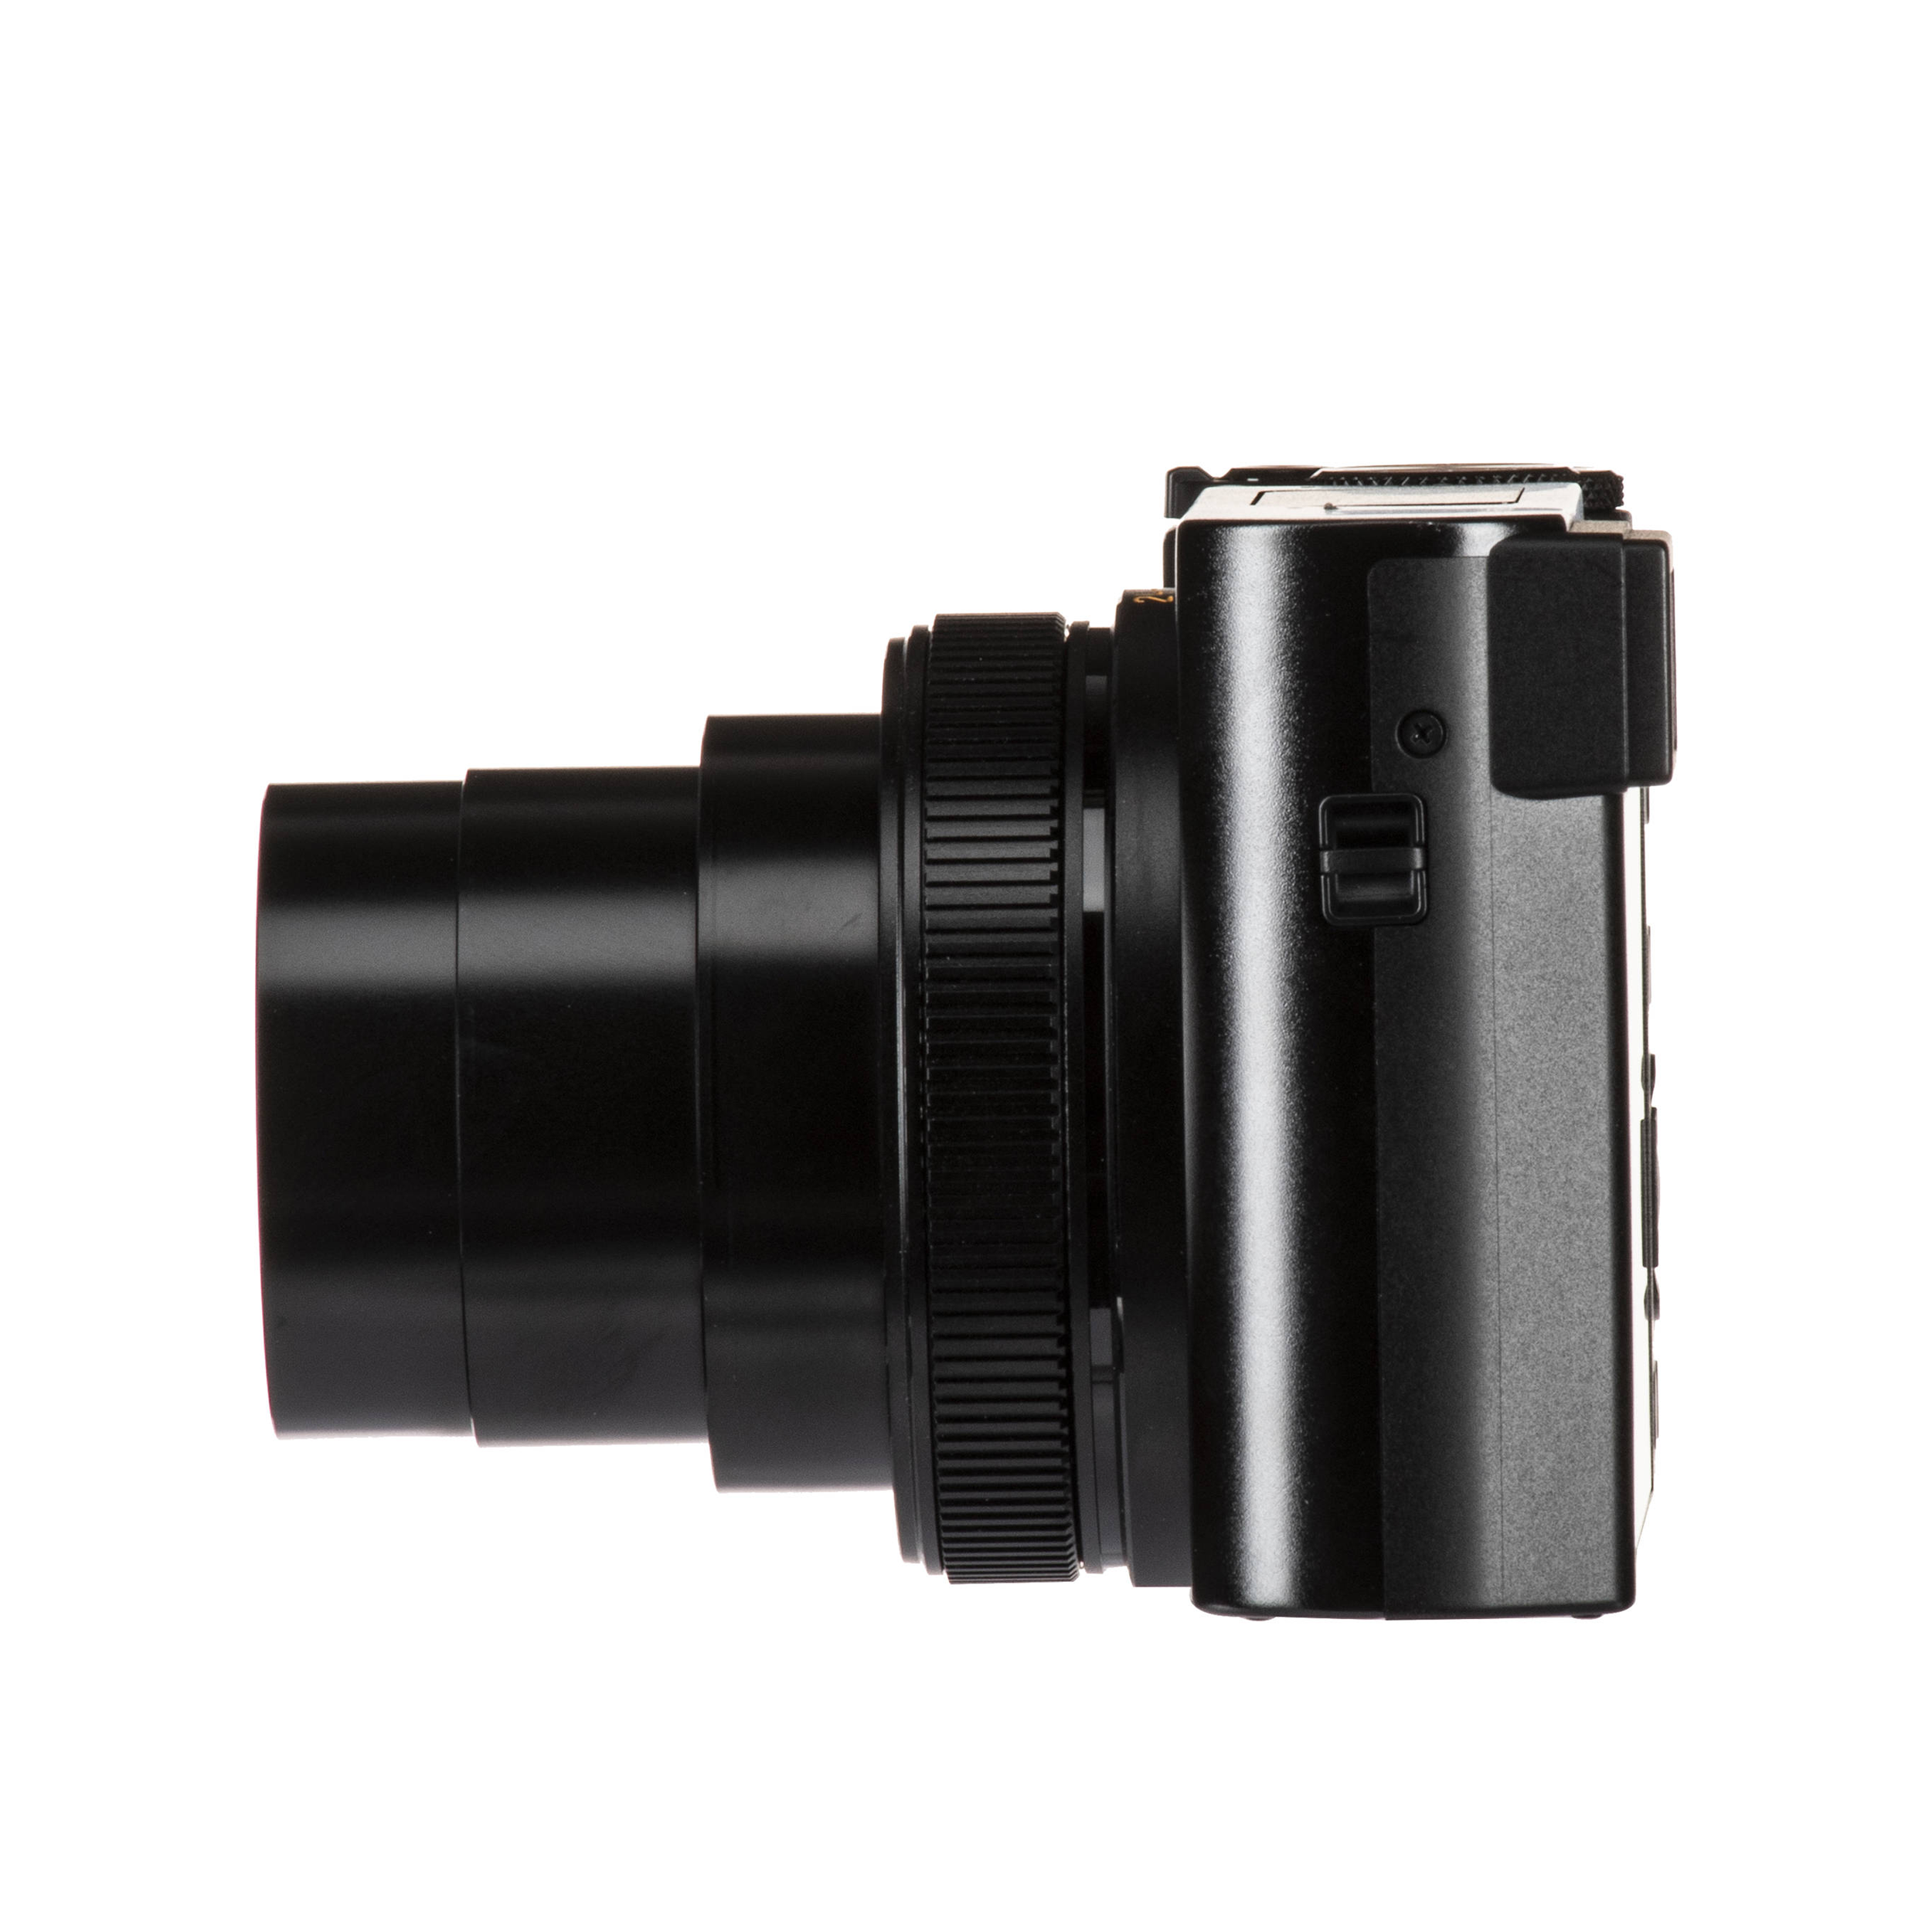 Panasonic Lumix DC-ZS200D Digital Camera - Black